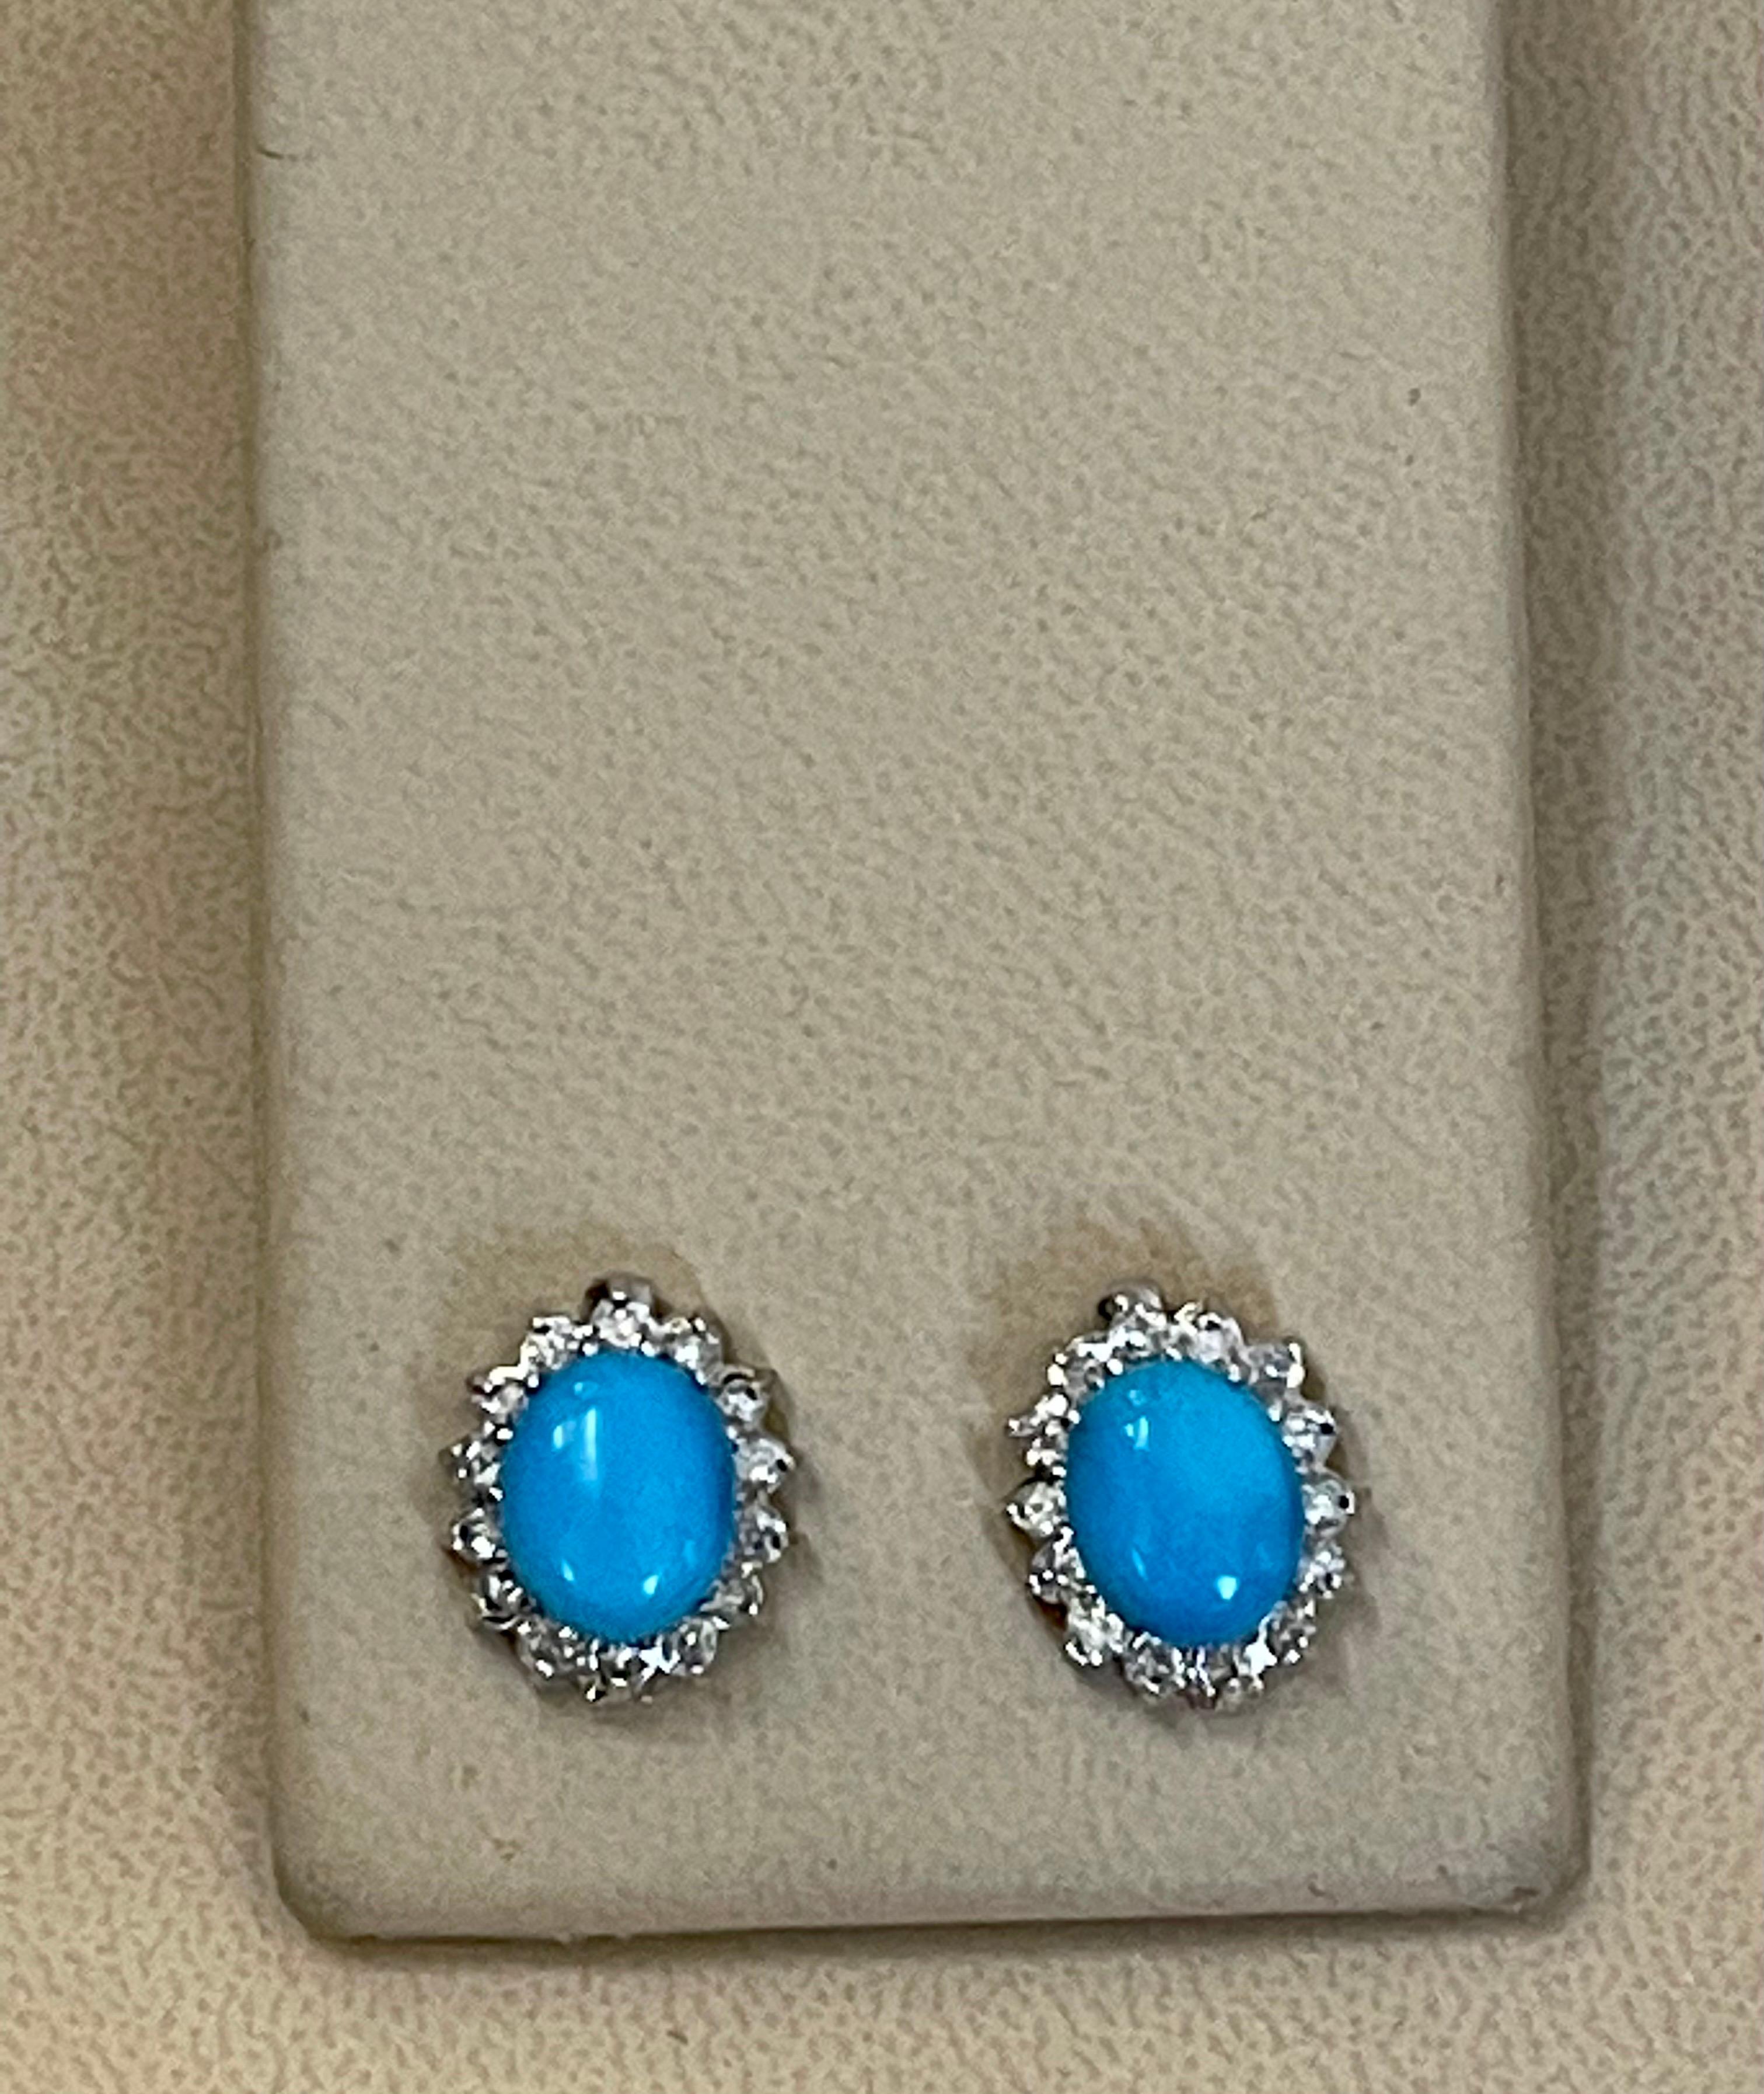 8 Ct Oval Sleeping Beauty Turquoise & 1 Ct Diamond Stud Earrings 14 K White Gold 5